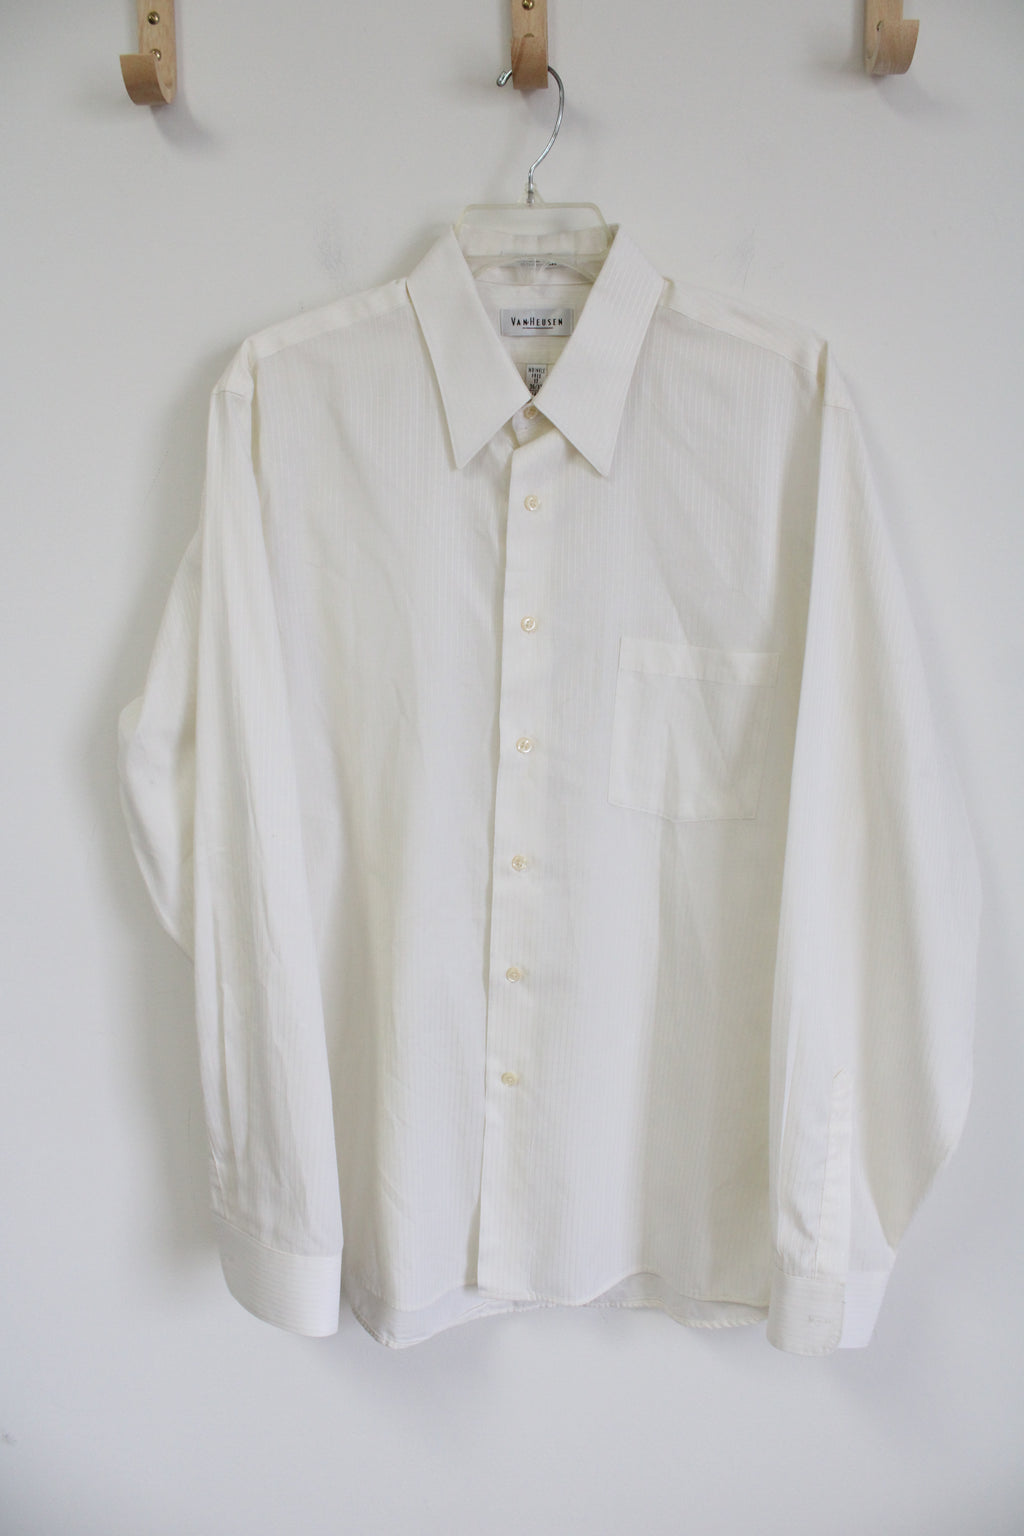 Van Heusen Satin Striped Cream Button Down Shirt | XL